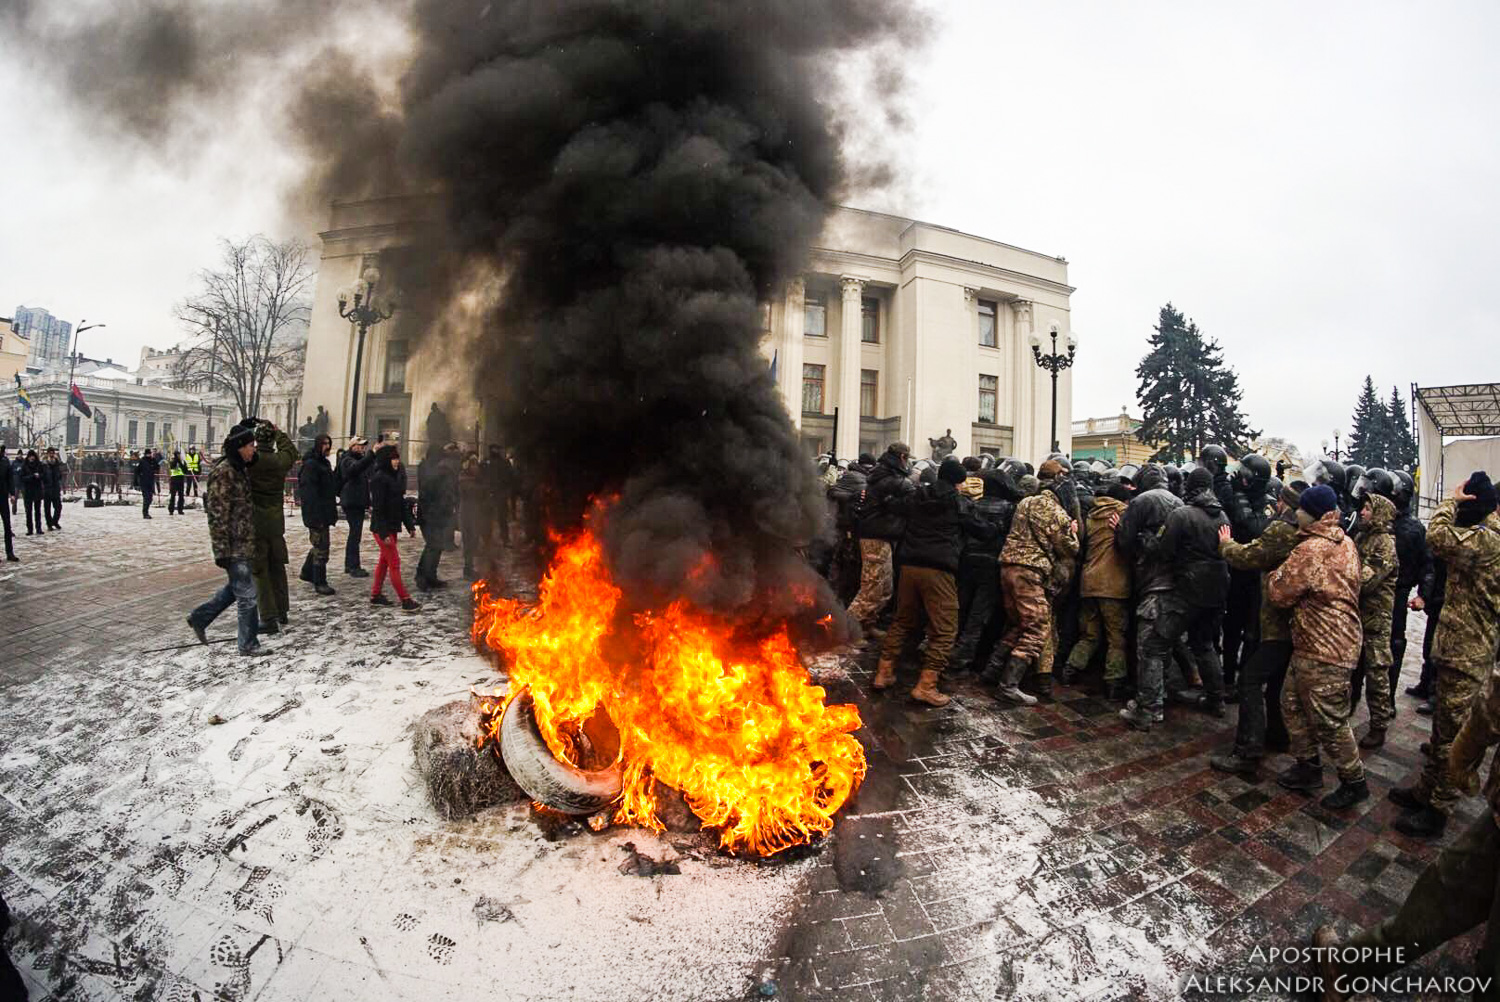 Donbas - Ukraine News in brief. Tuesday 16 January. [Ukrainian sources] C2679b042f6179dafa99cb620d164298